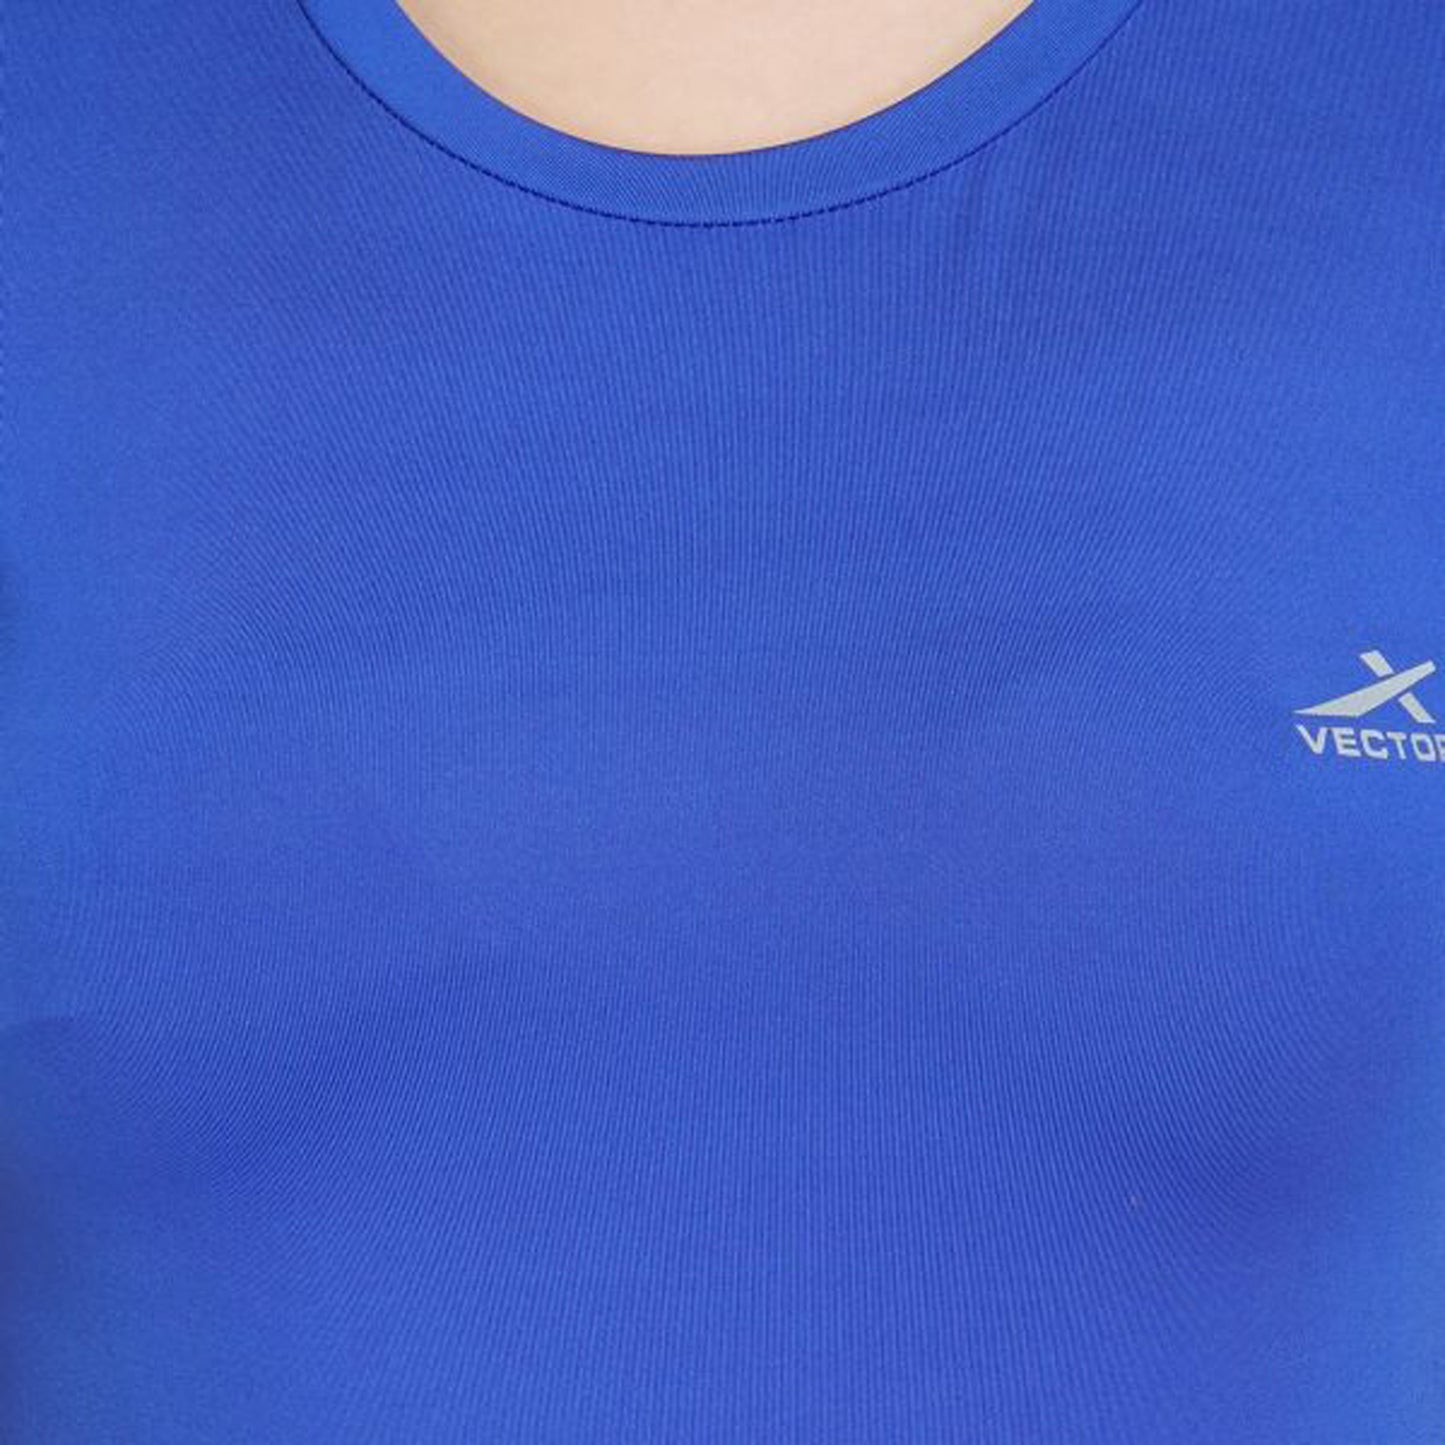 Vector X VTDF-018 Women's Round Neck T-Shirt , Teal - Best Price online Prokicksports.com